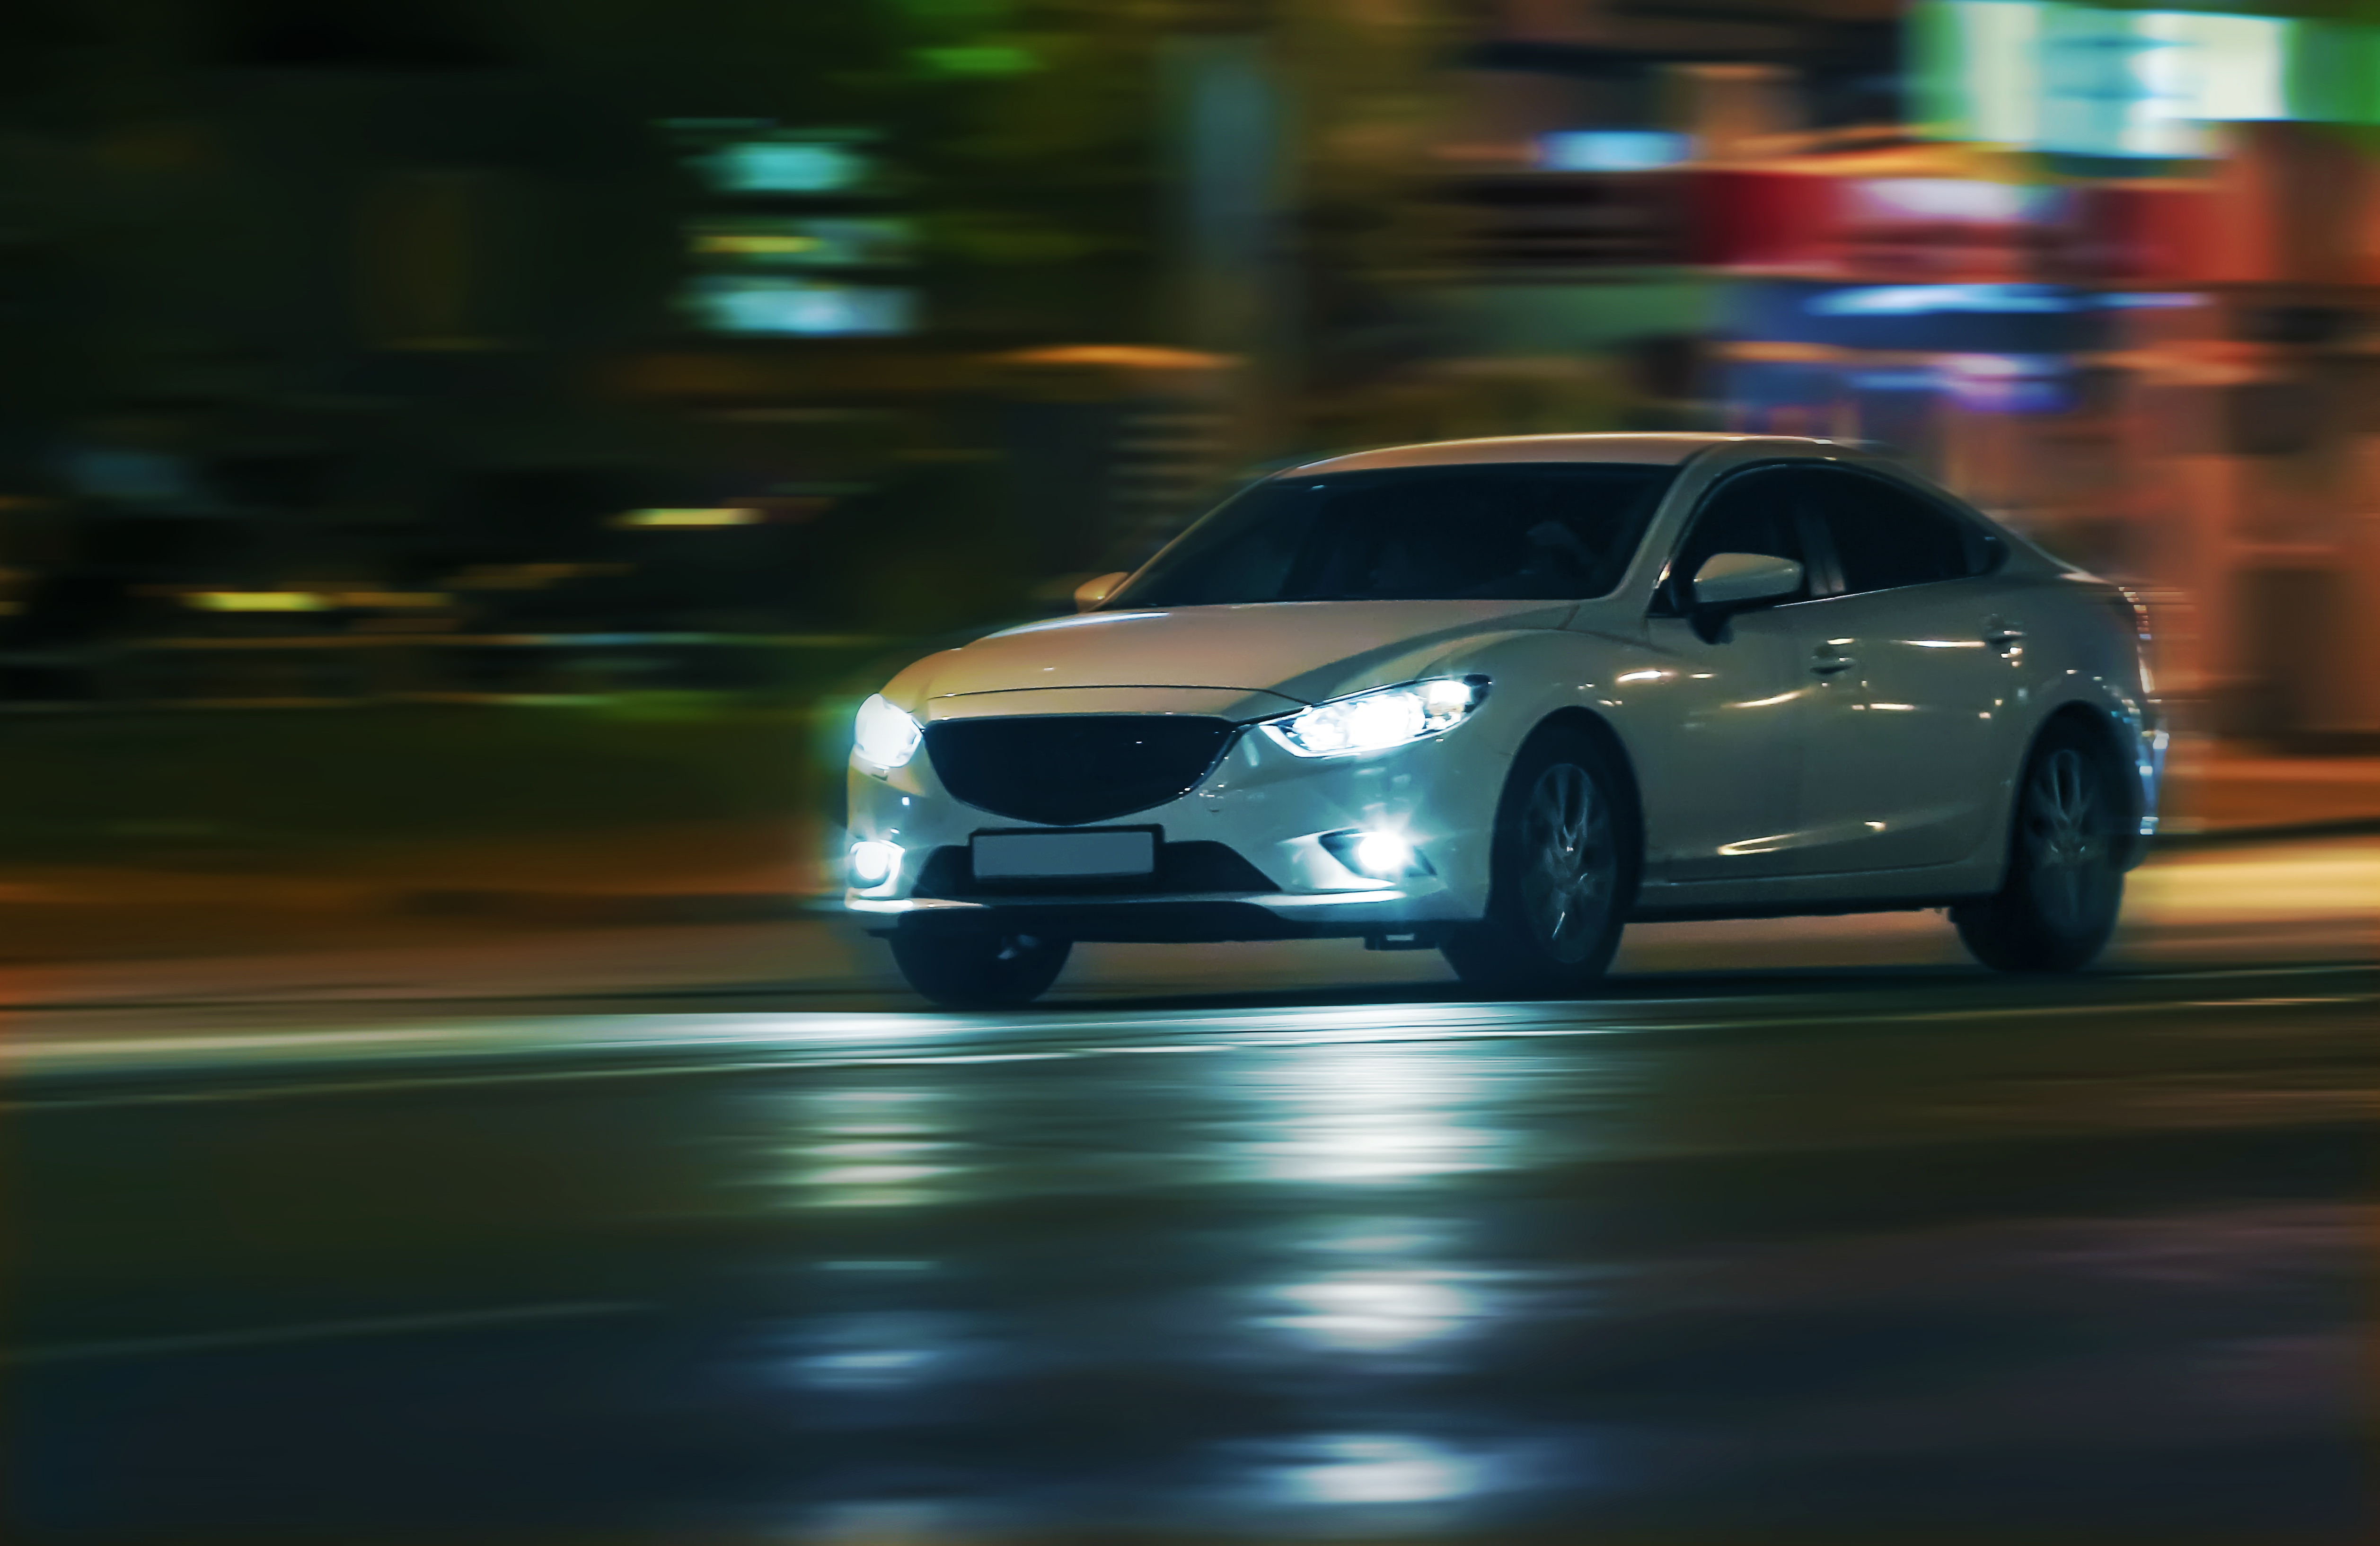 Car on night road. | Source: Shutterstock